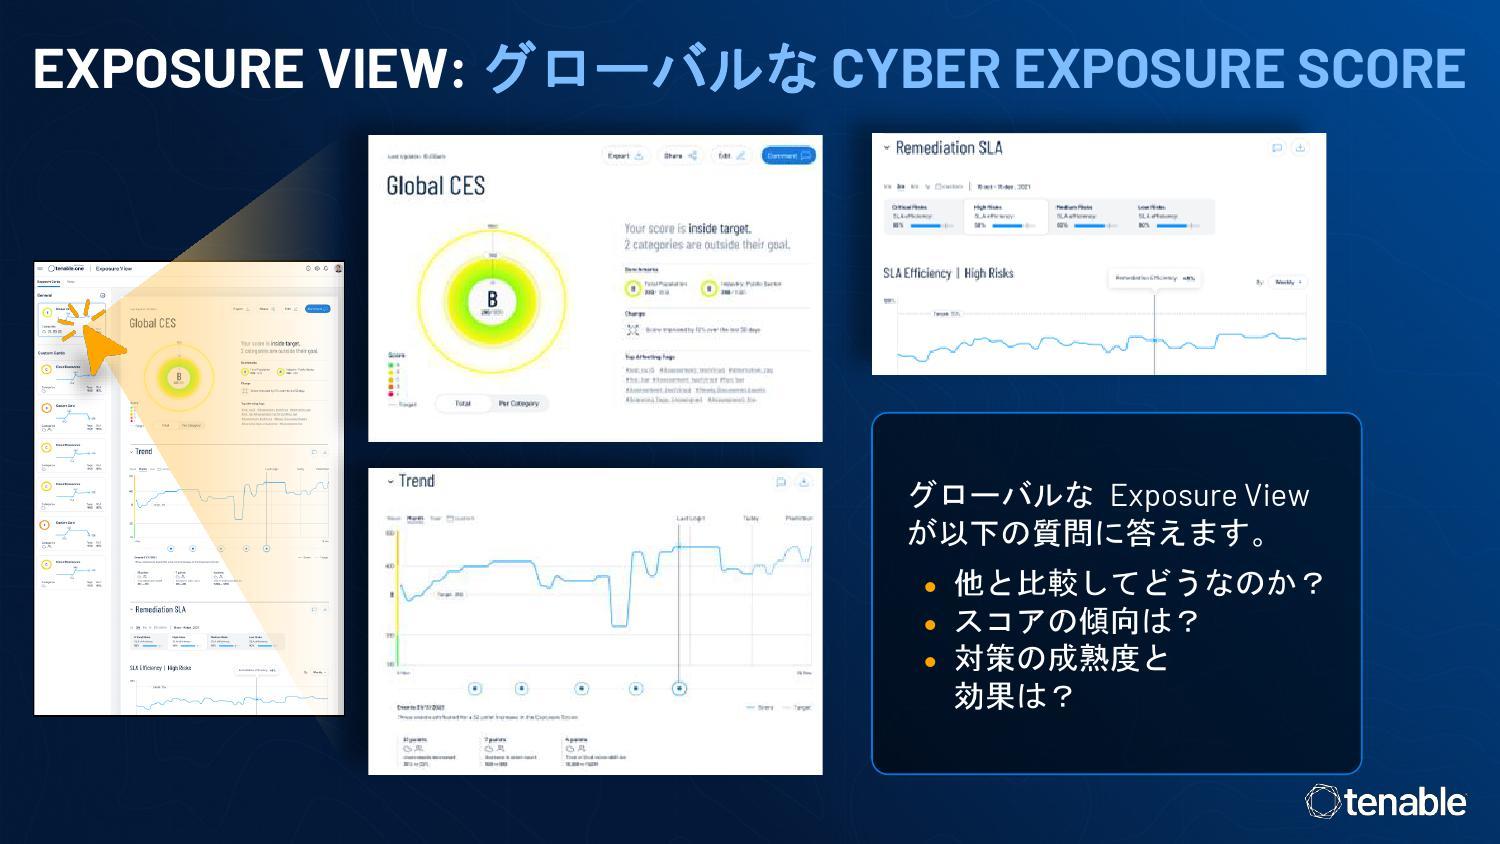 Exposure VieẘTvmNbNĊgn oFTenable Network Security Japan